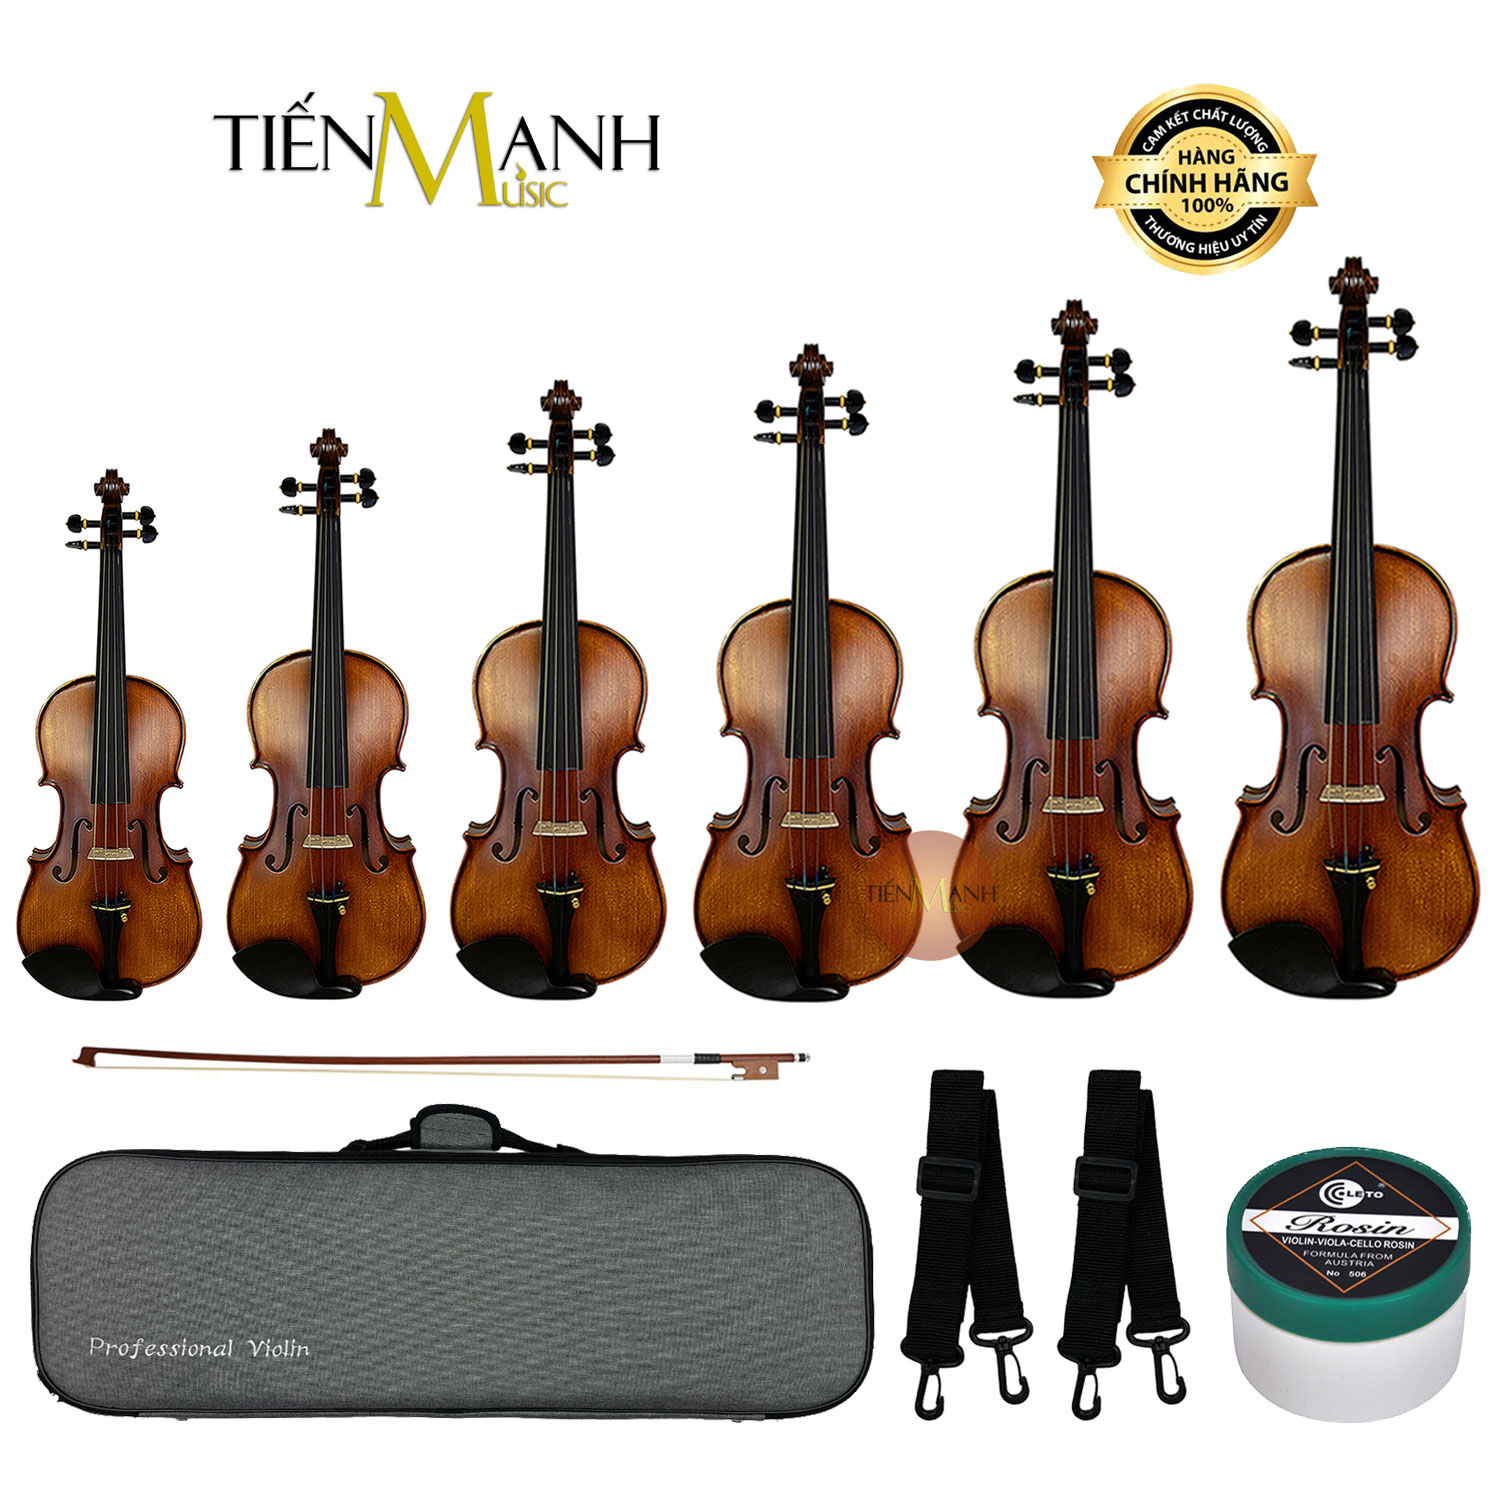 Đàn Violin Amati Vân Thật VF300 Size 4-4, 3-4, 1-2, 1-4, 1-8, 1-10, 1-16 - Vĩ Cầm VF-300 Vi-ô-lông Violon